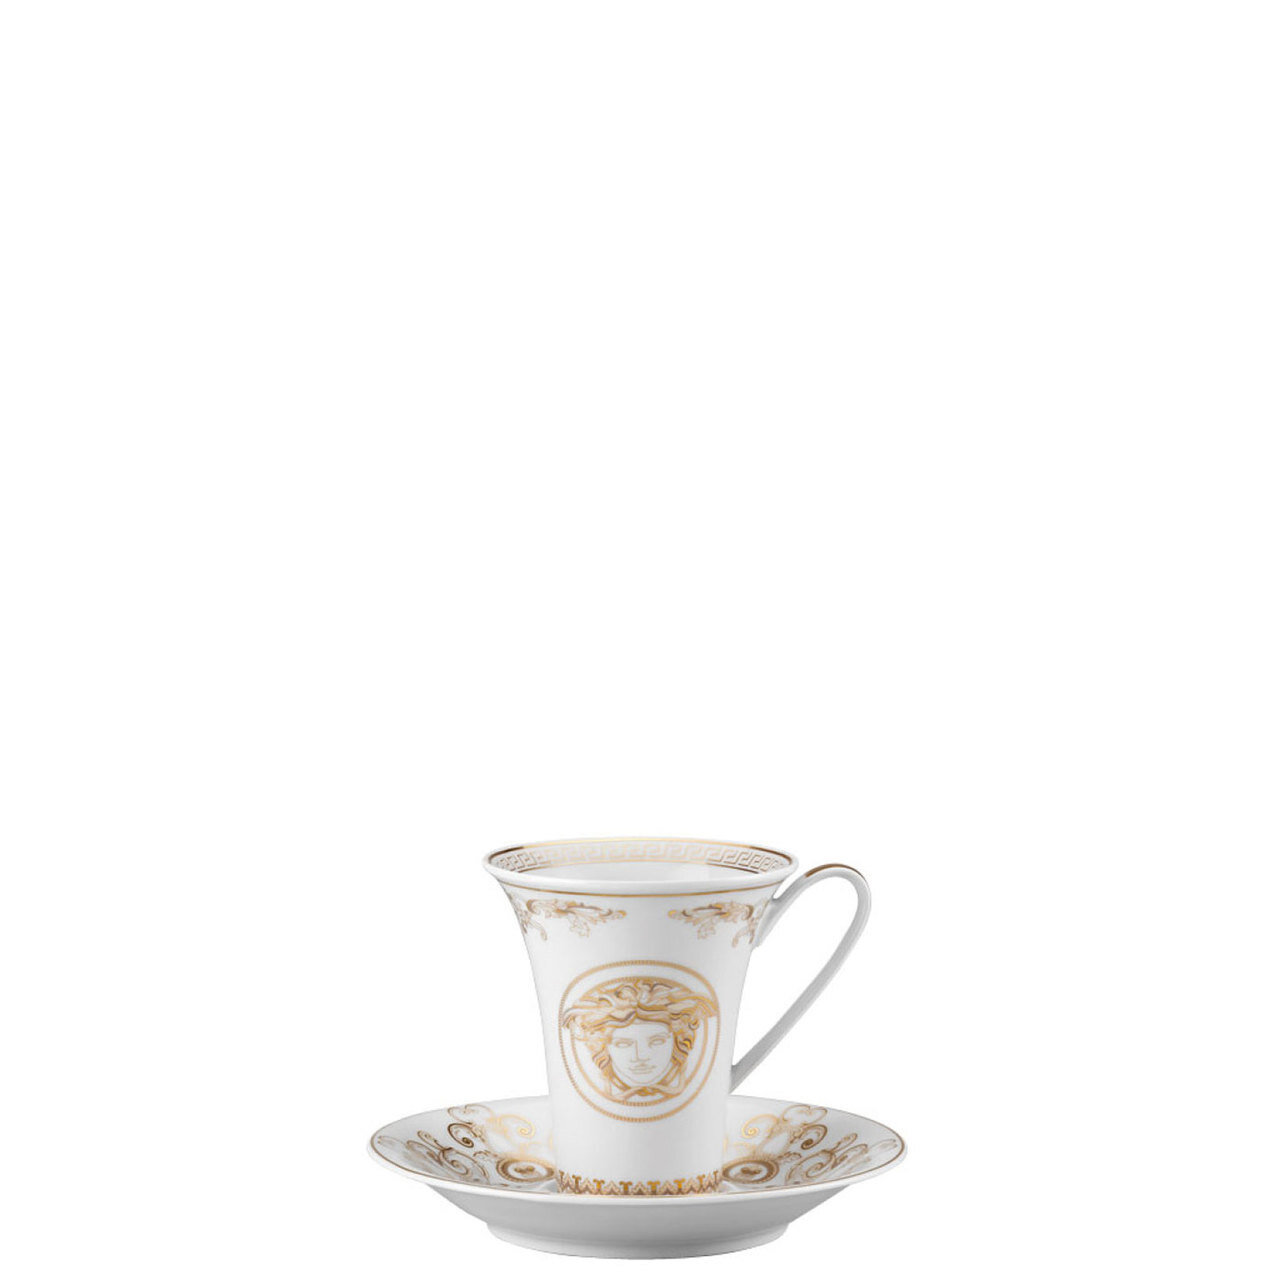 Versace Medusa Gala Coffee Cup and Saucer 6 Inch 6 oz.